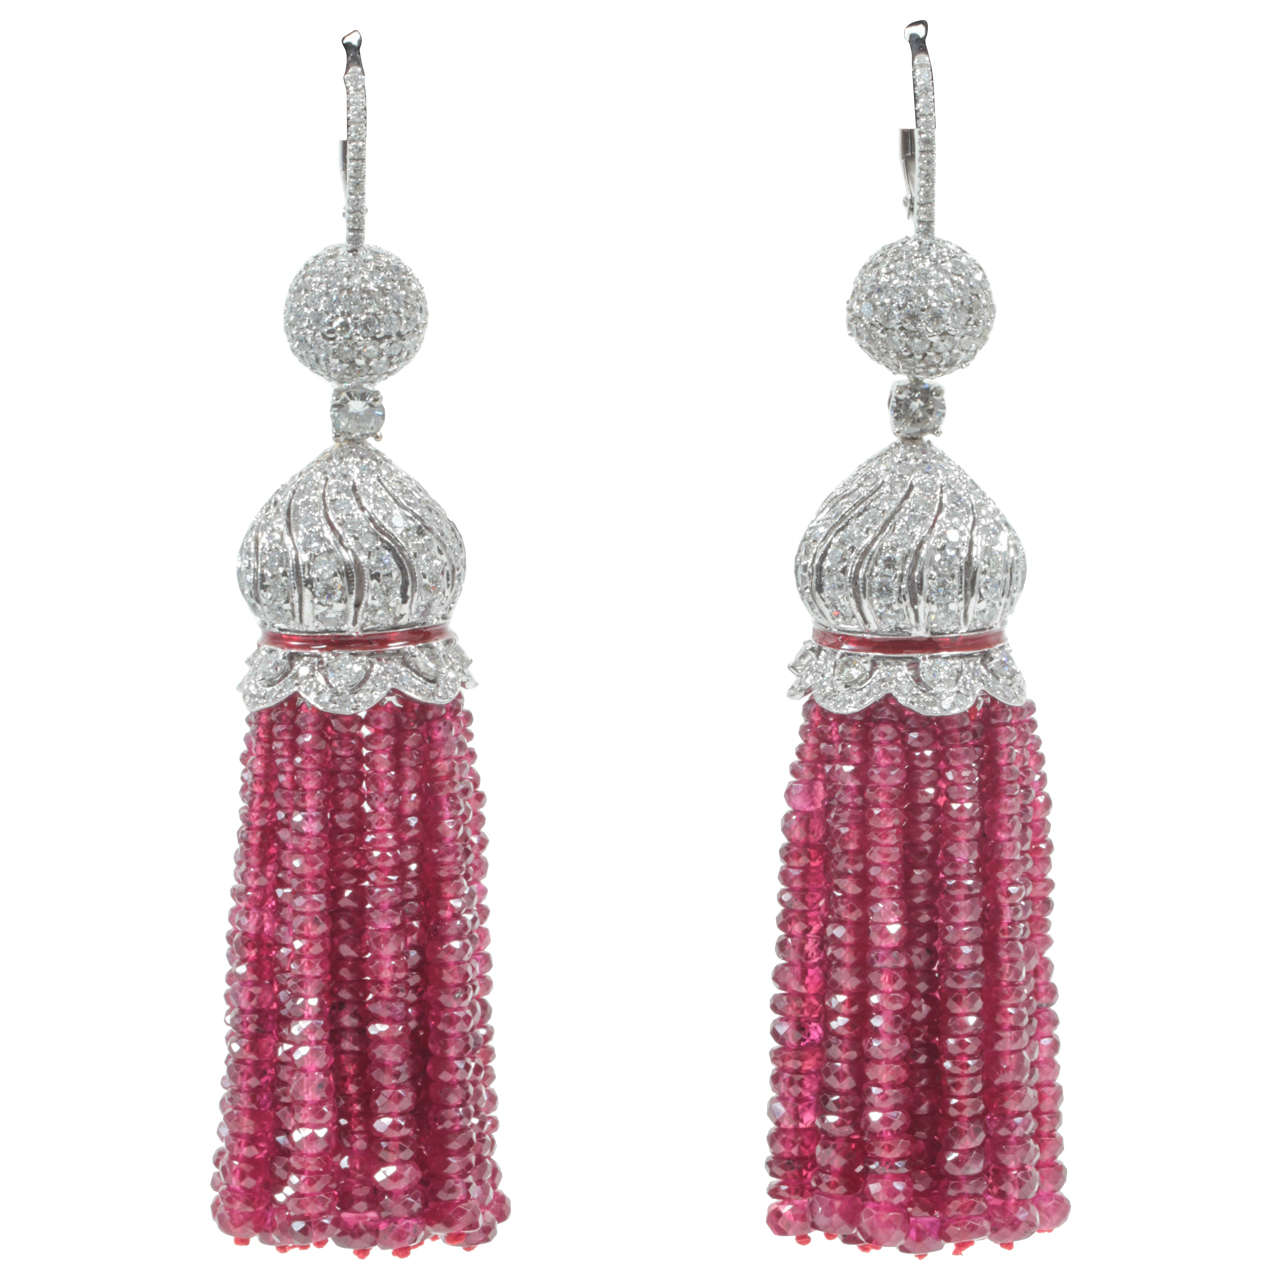 Two Hundred Carat Burma Ruby Beads Diamond Tassel Earrings